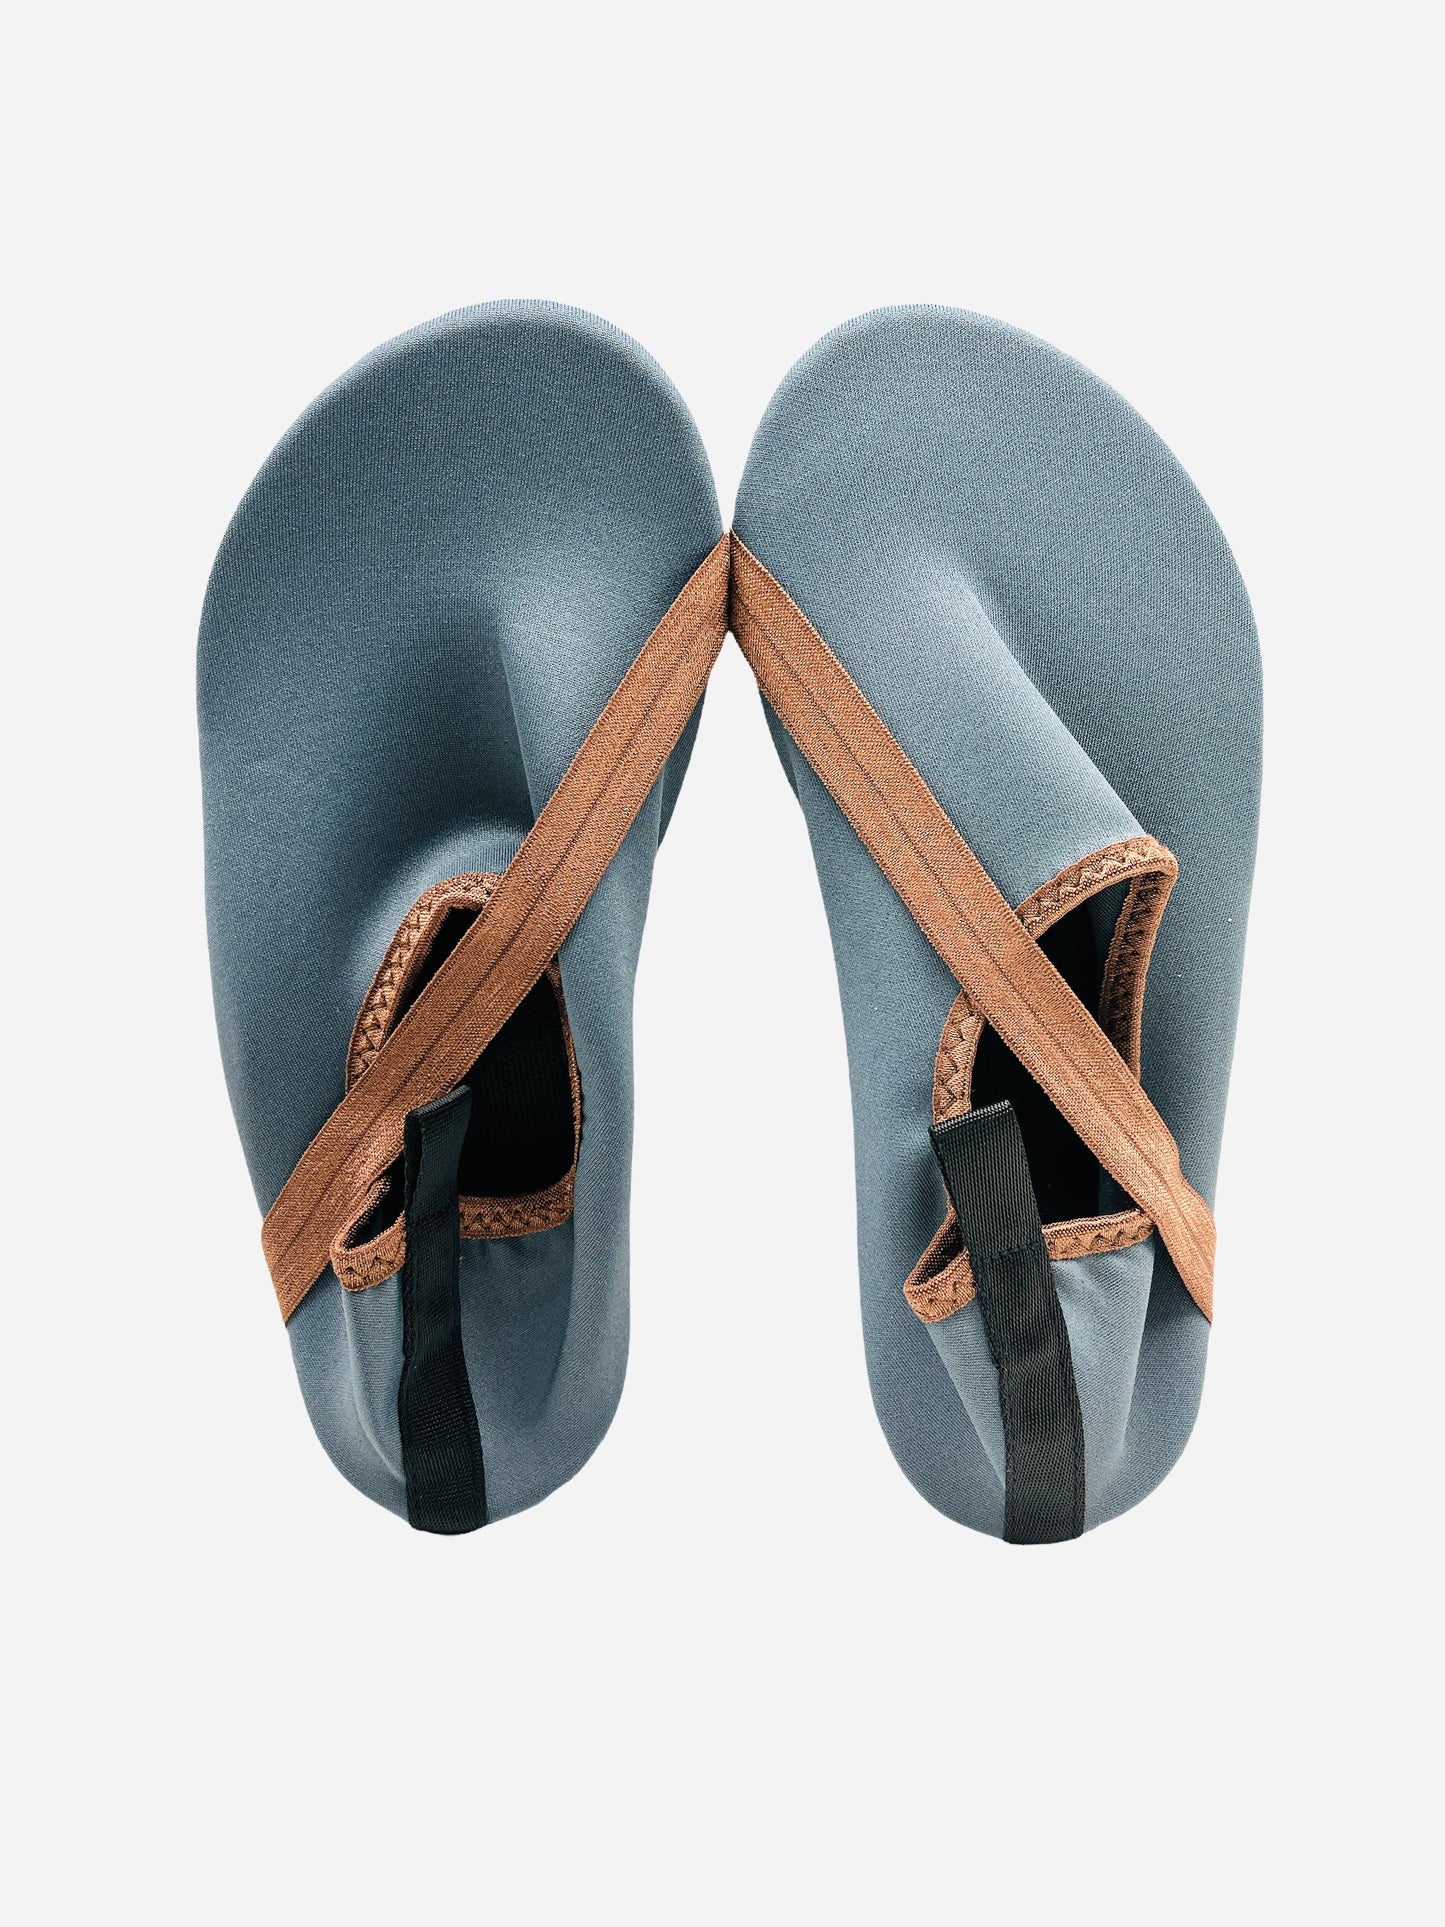 Grey Women's Summer Swim Shoes (Size 4.5/5-36/37)